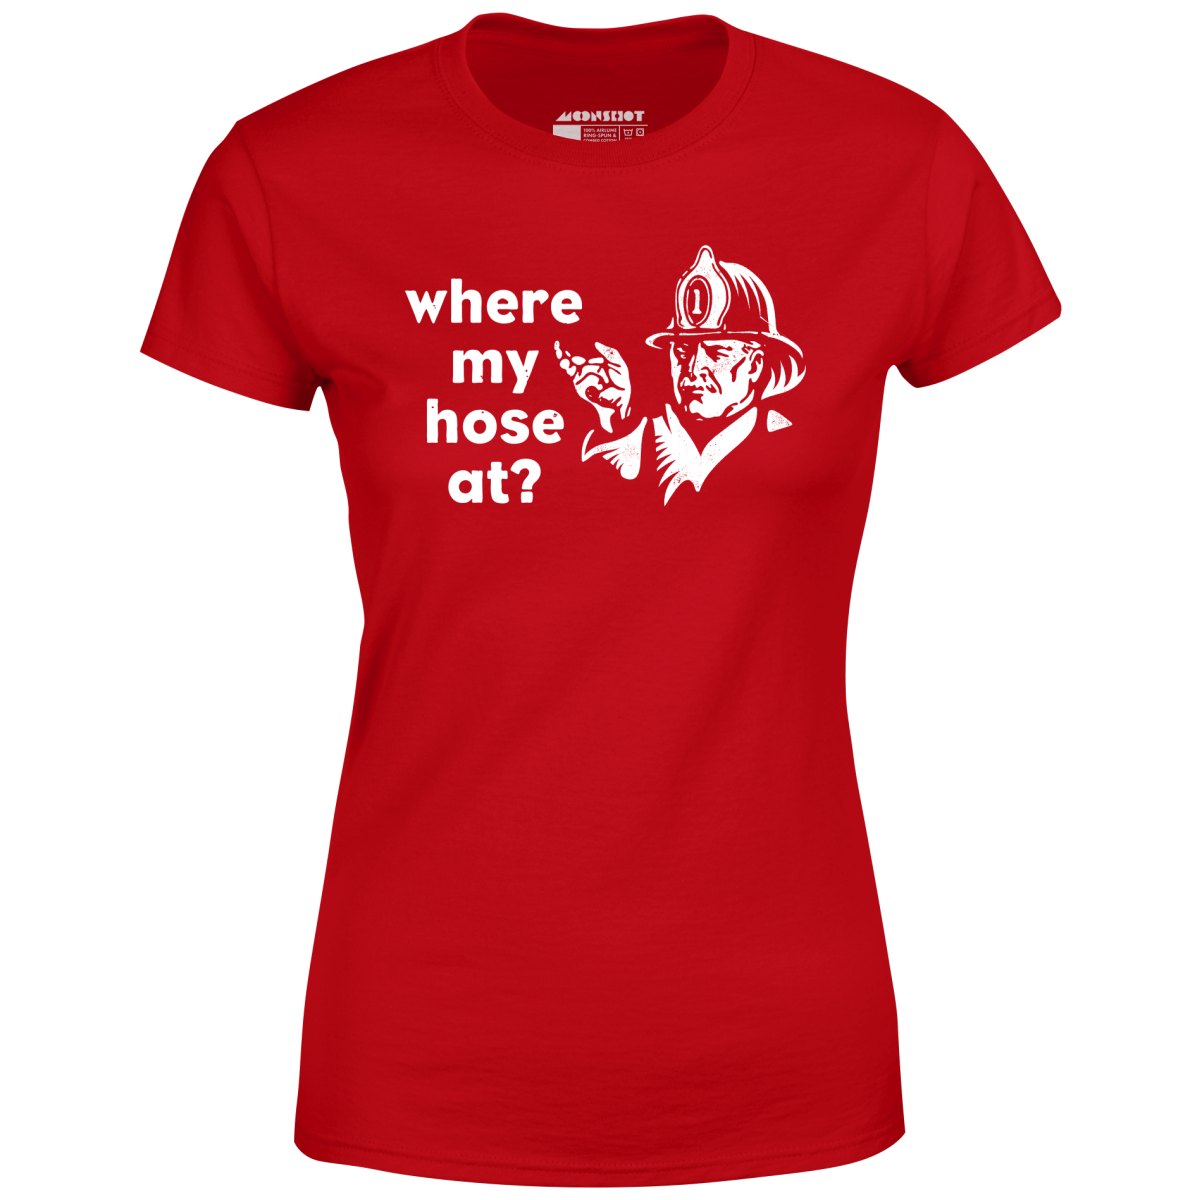 Where My Hose At? - Women's T-Shirt